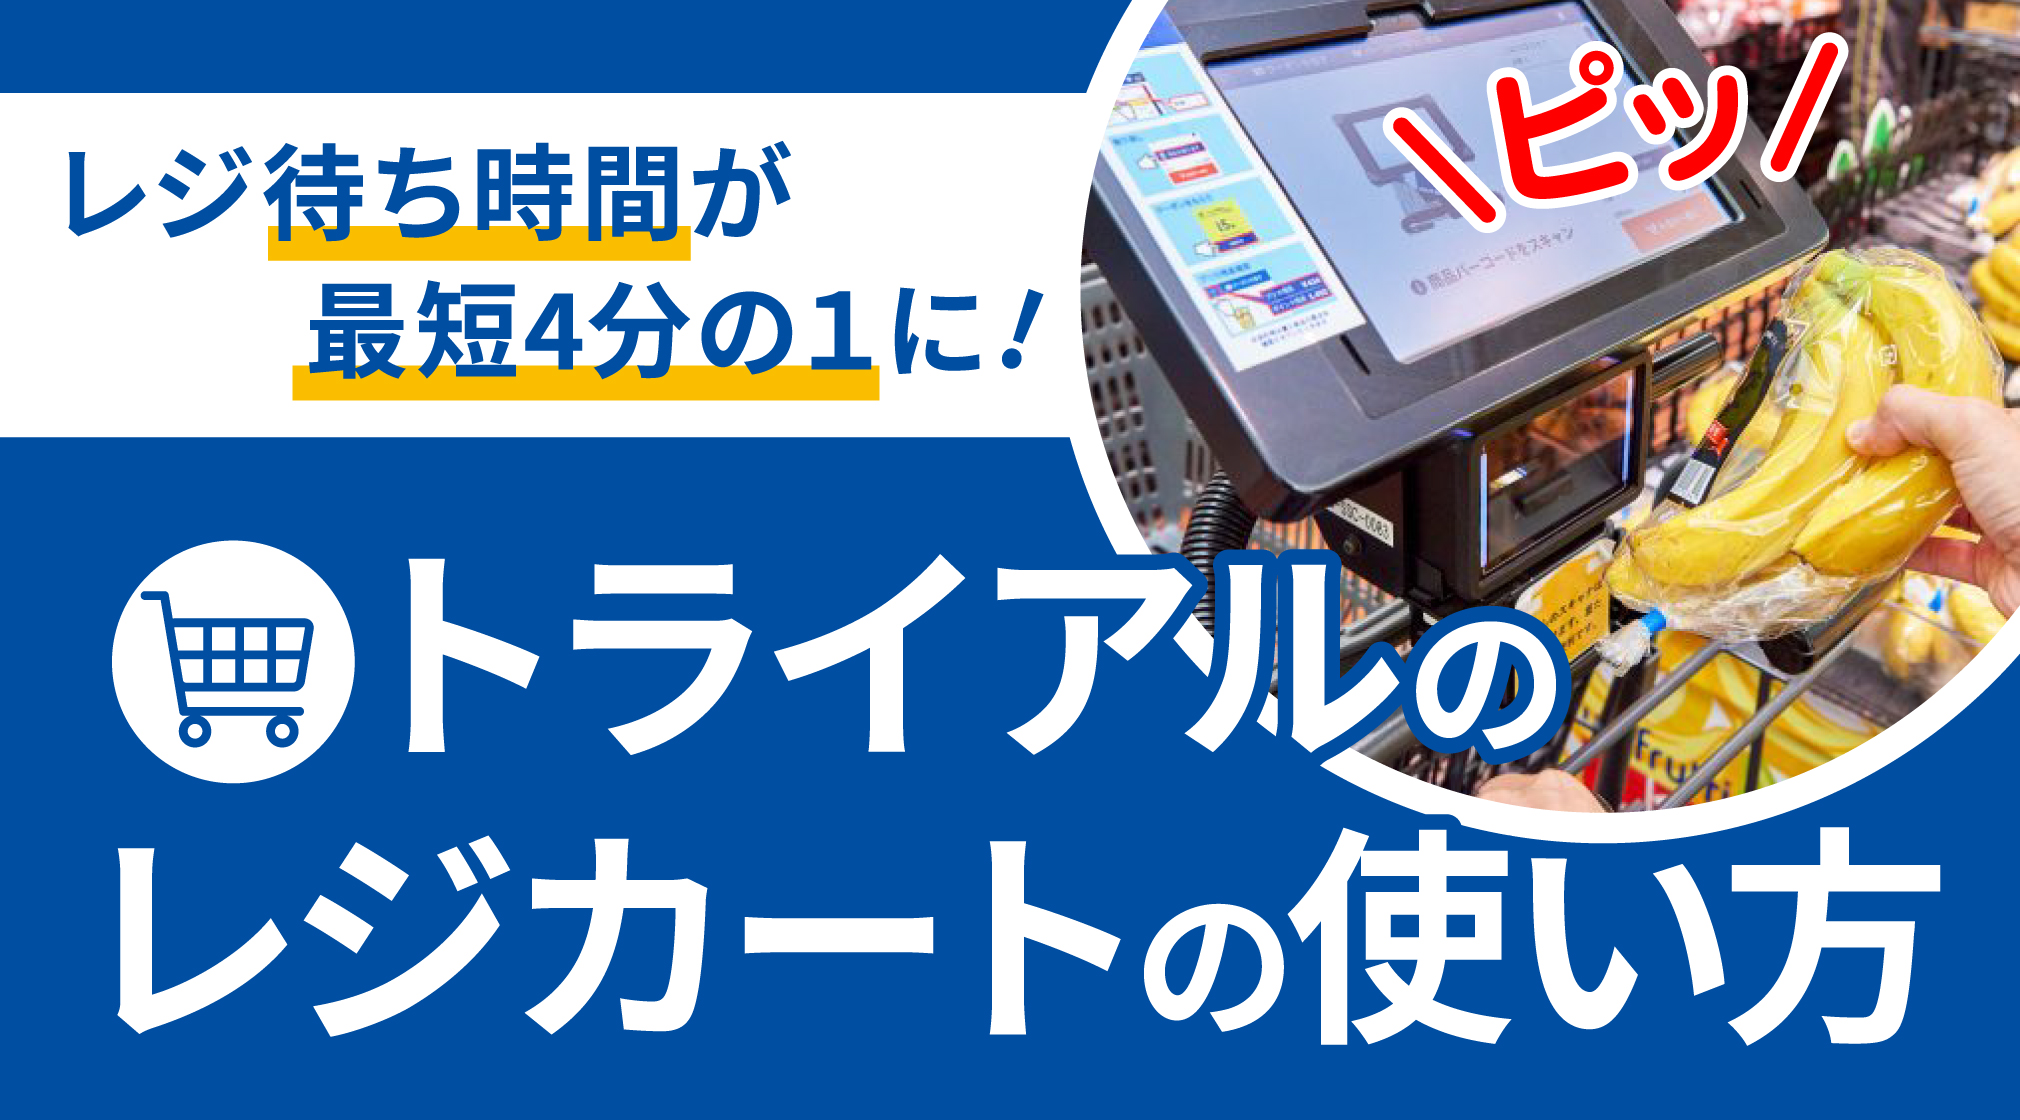 http://trial-website-dev.retail-ai.jp/mag/detail/424/?utm_source=HP&utm_medium=main&utm_campaign=TRIALMAGAZINE&utm_content=reji_cart